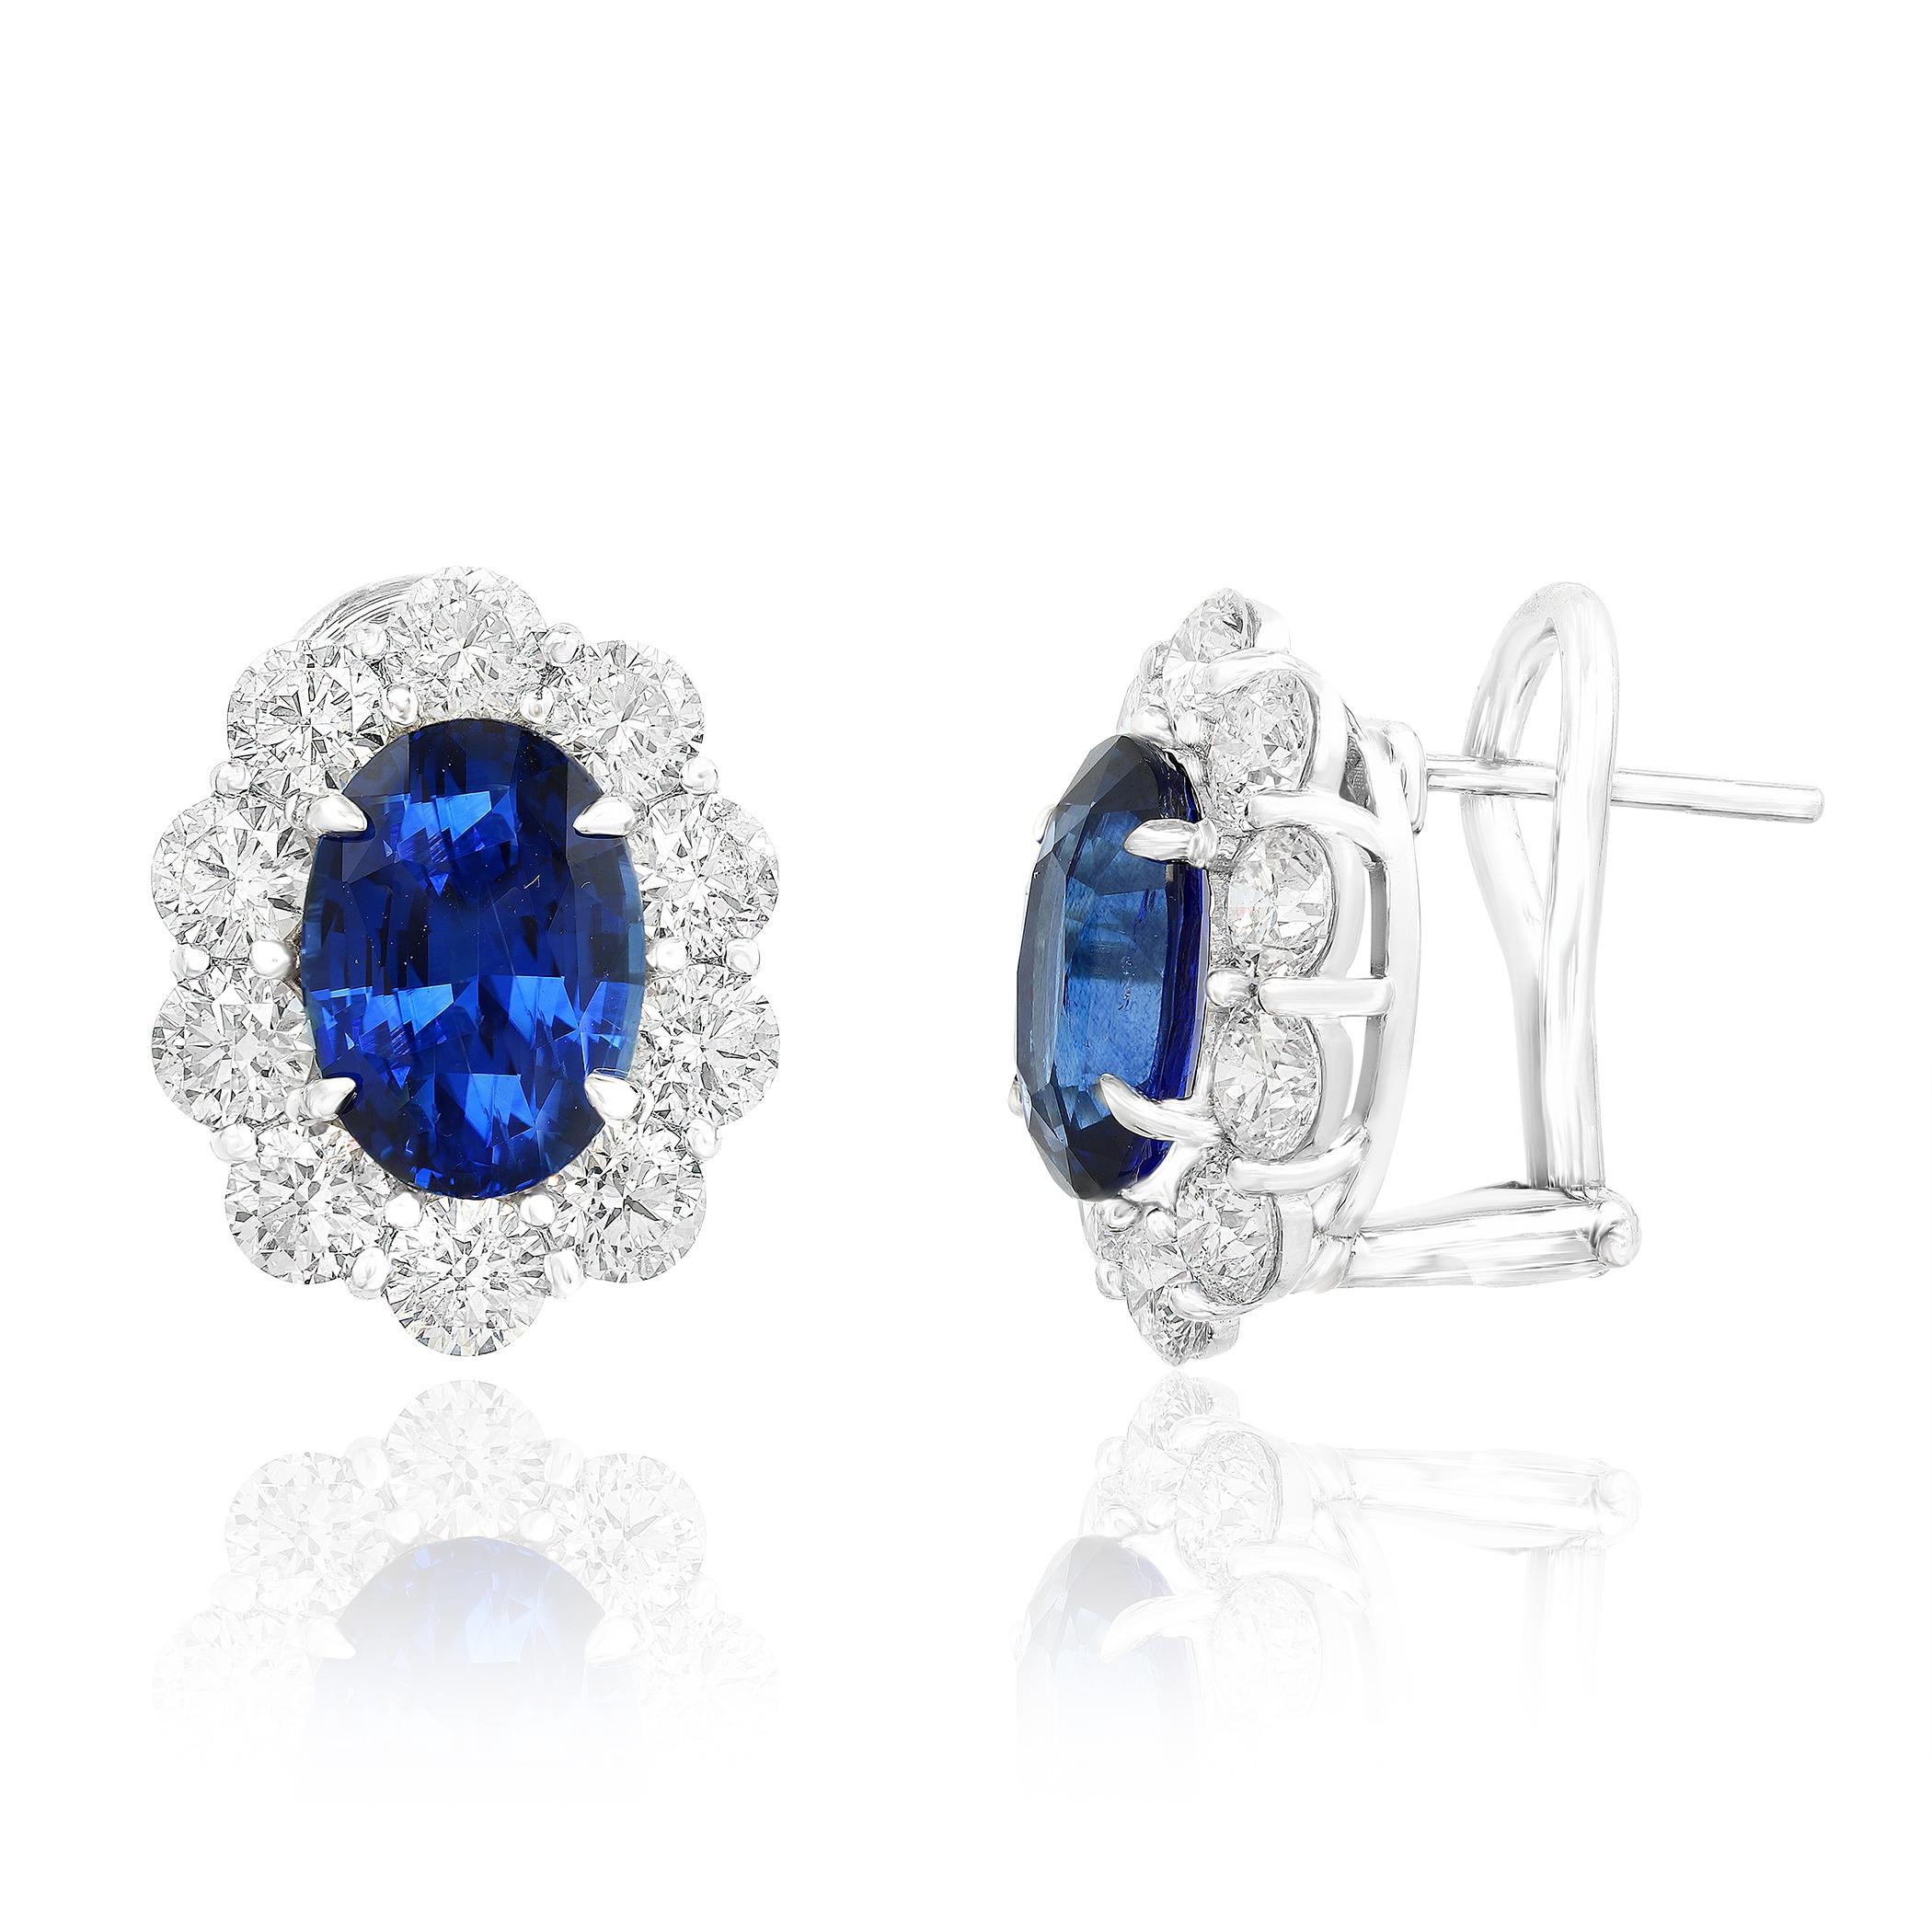 Oval Sapphire and Diamond Earrings